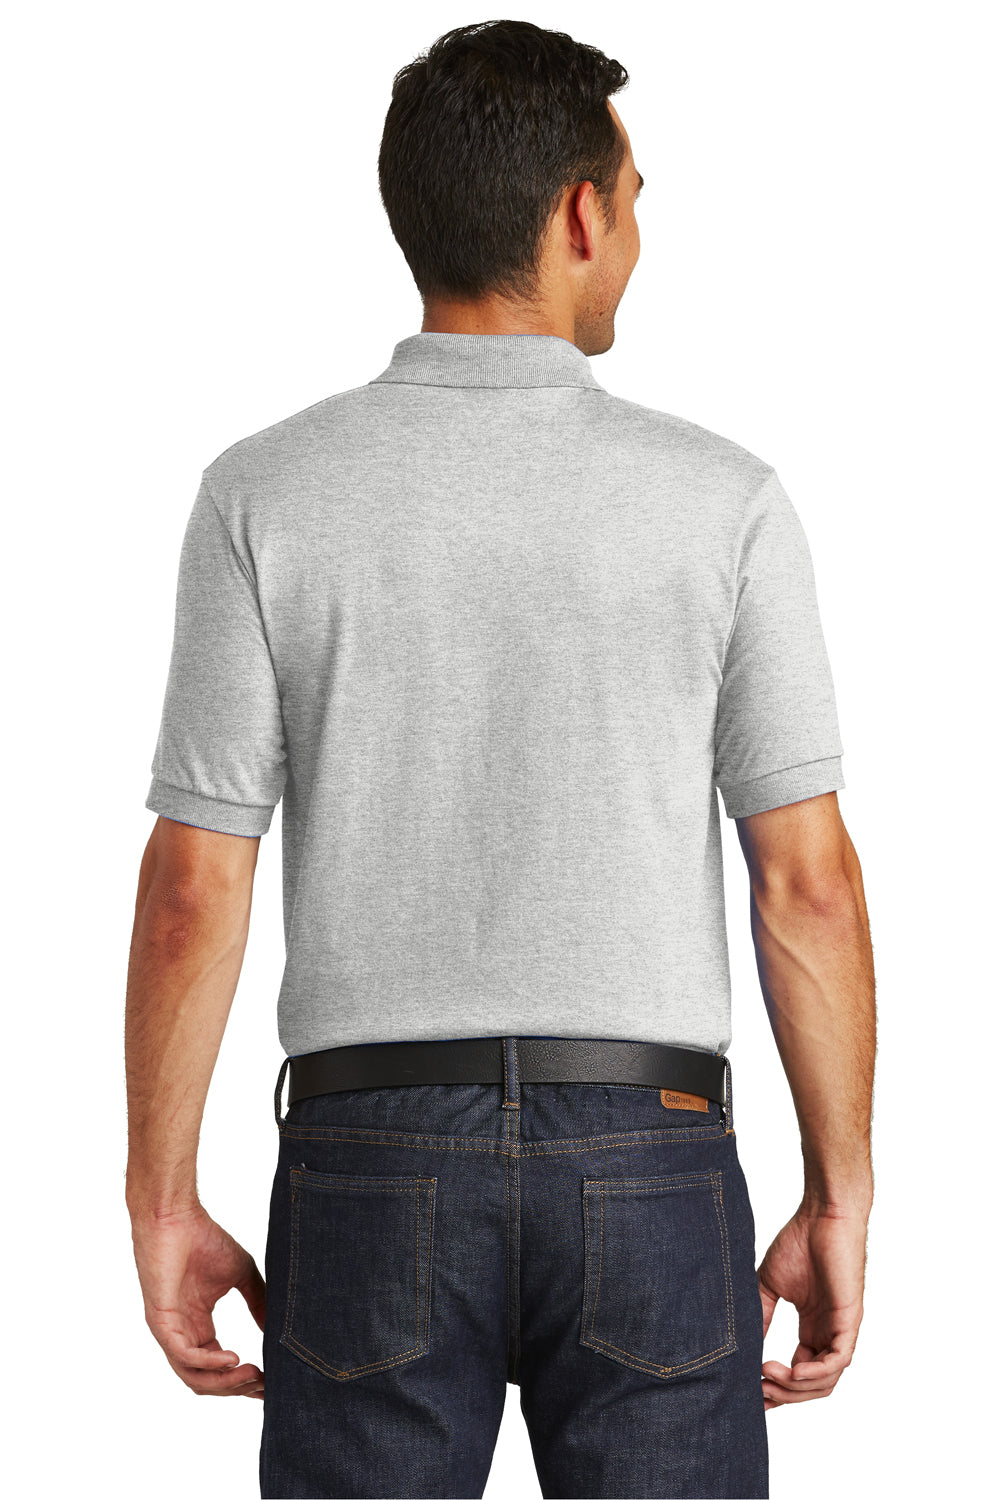 Port & Company KP55P Mens Core Stain Resistant Short Sleeve Polo Shirt w/ Pocket Ash Grey Back